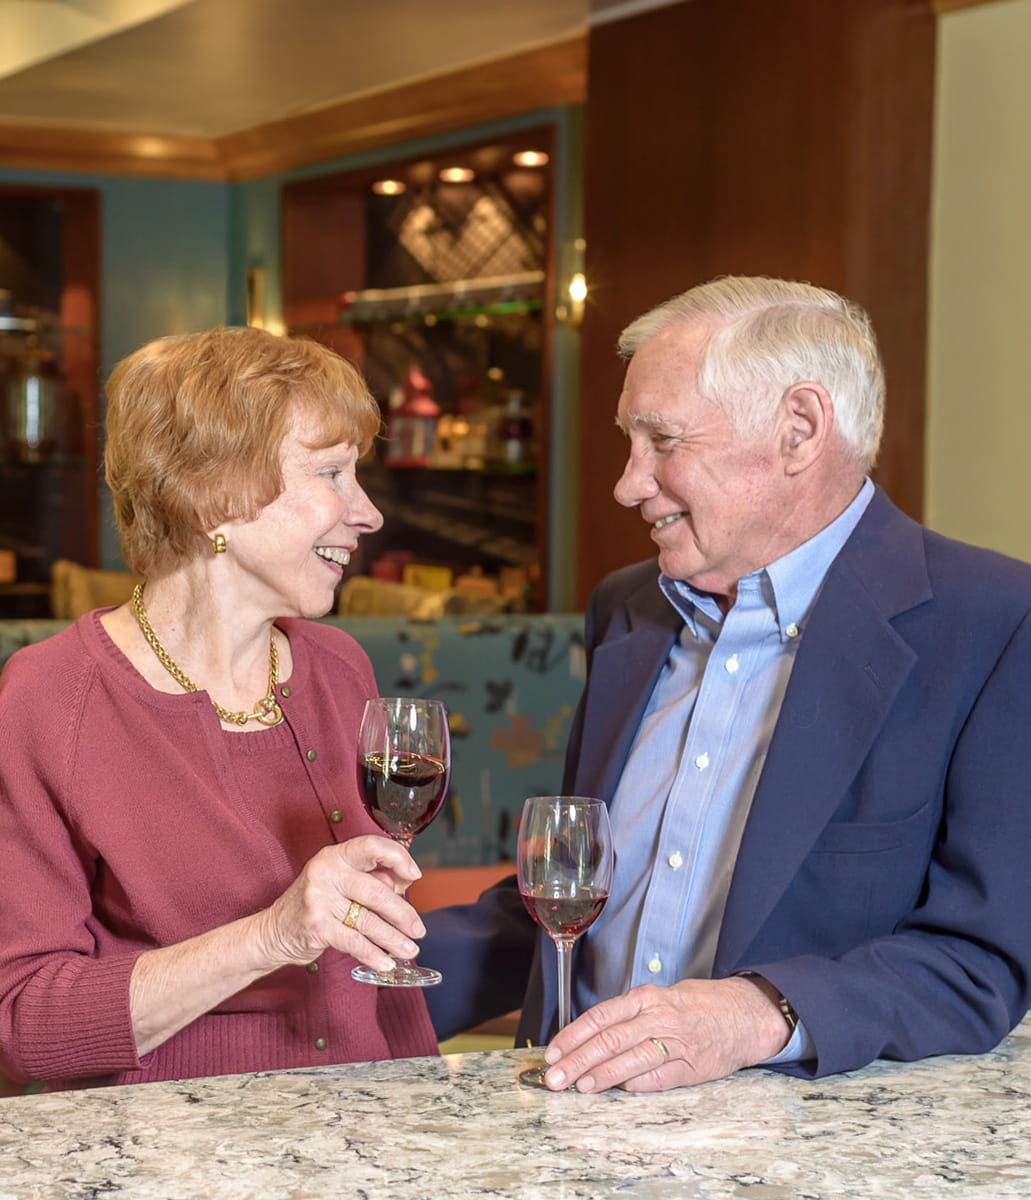 Man and woman sitting at bar and smiling. 